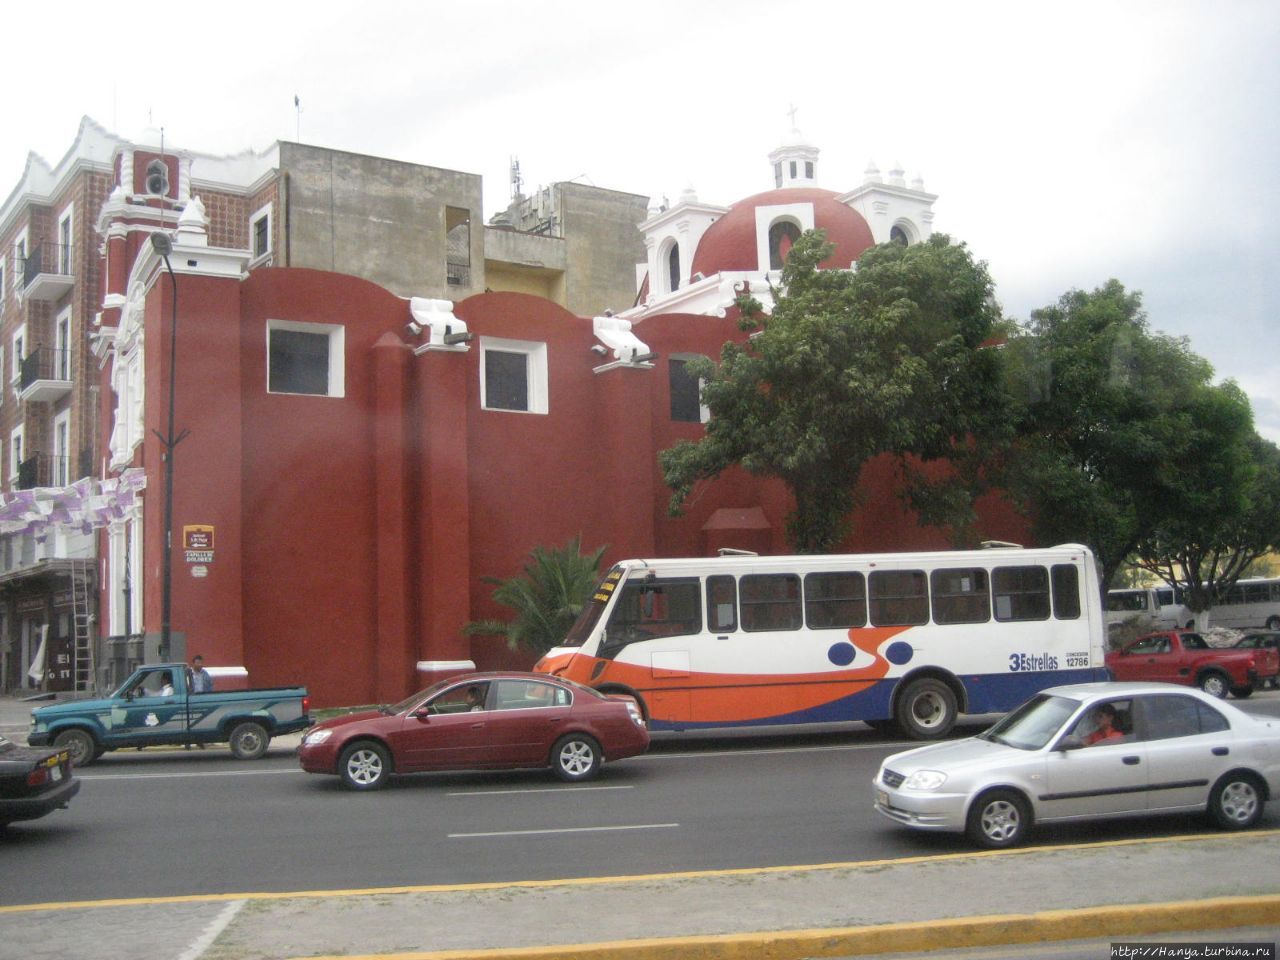 Пуэбла: город церквей и … машин. Ч.29 Пуэбла, Мексика